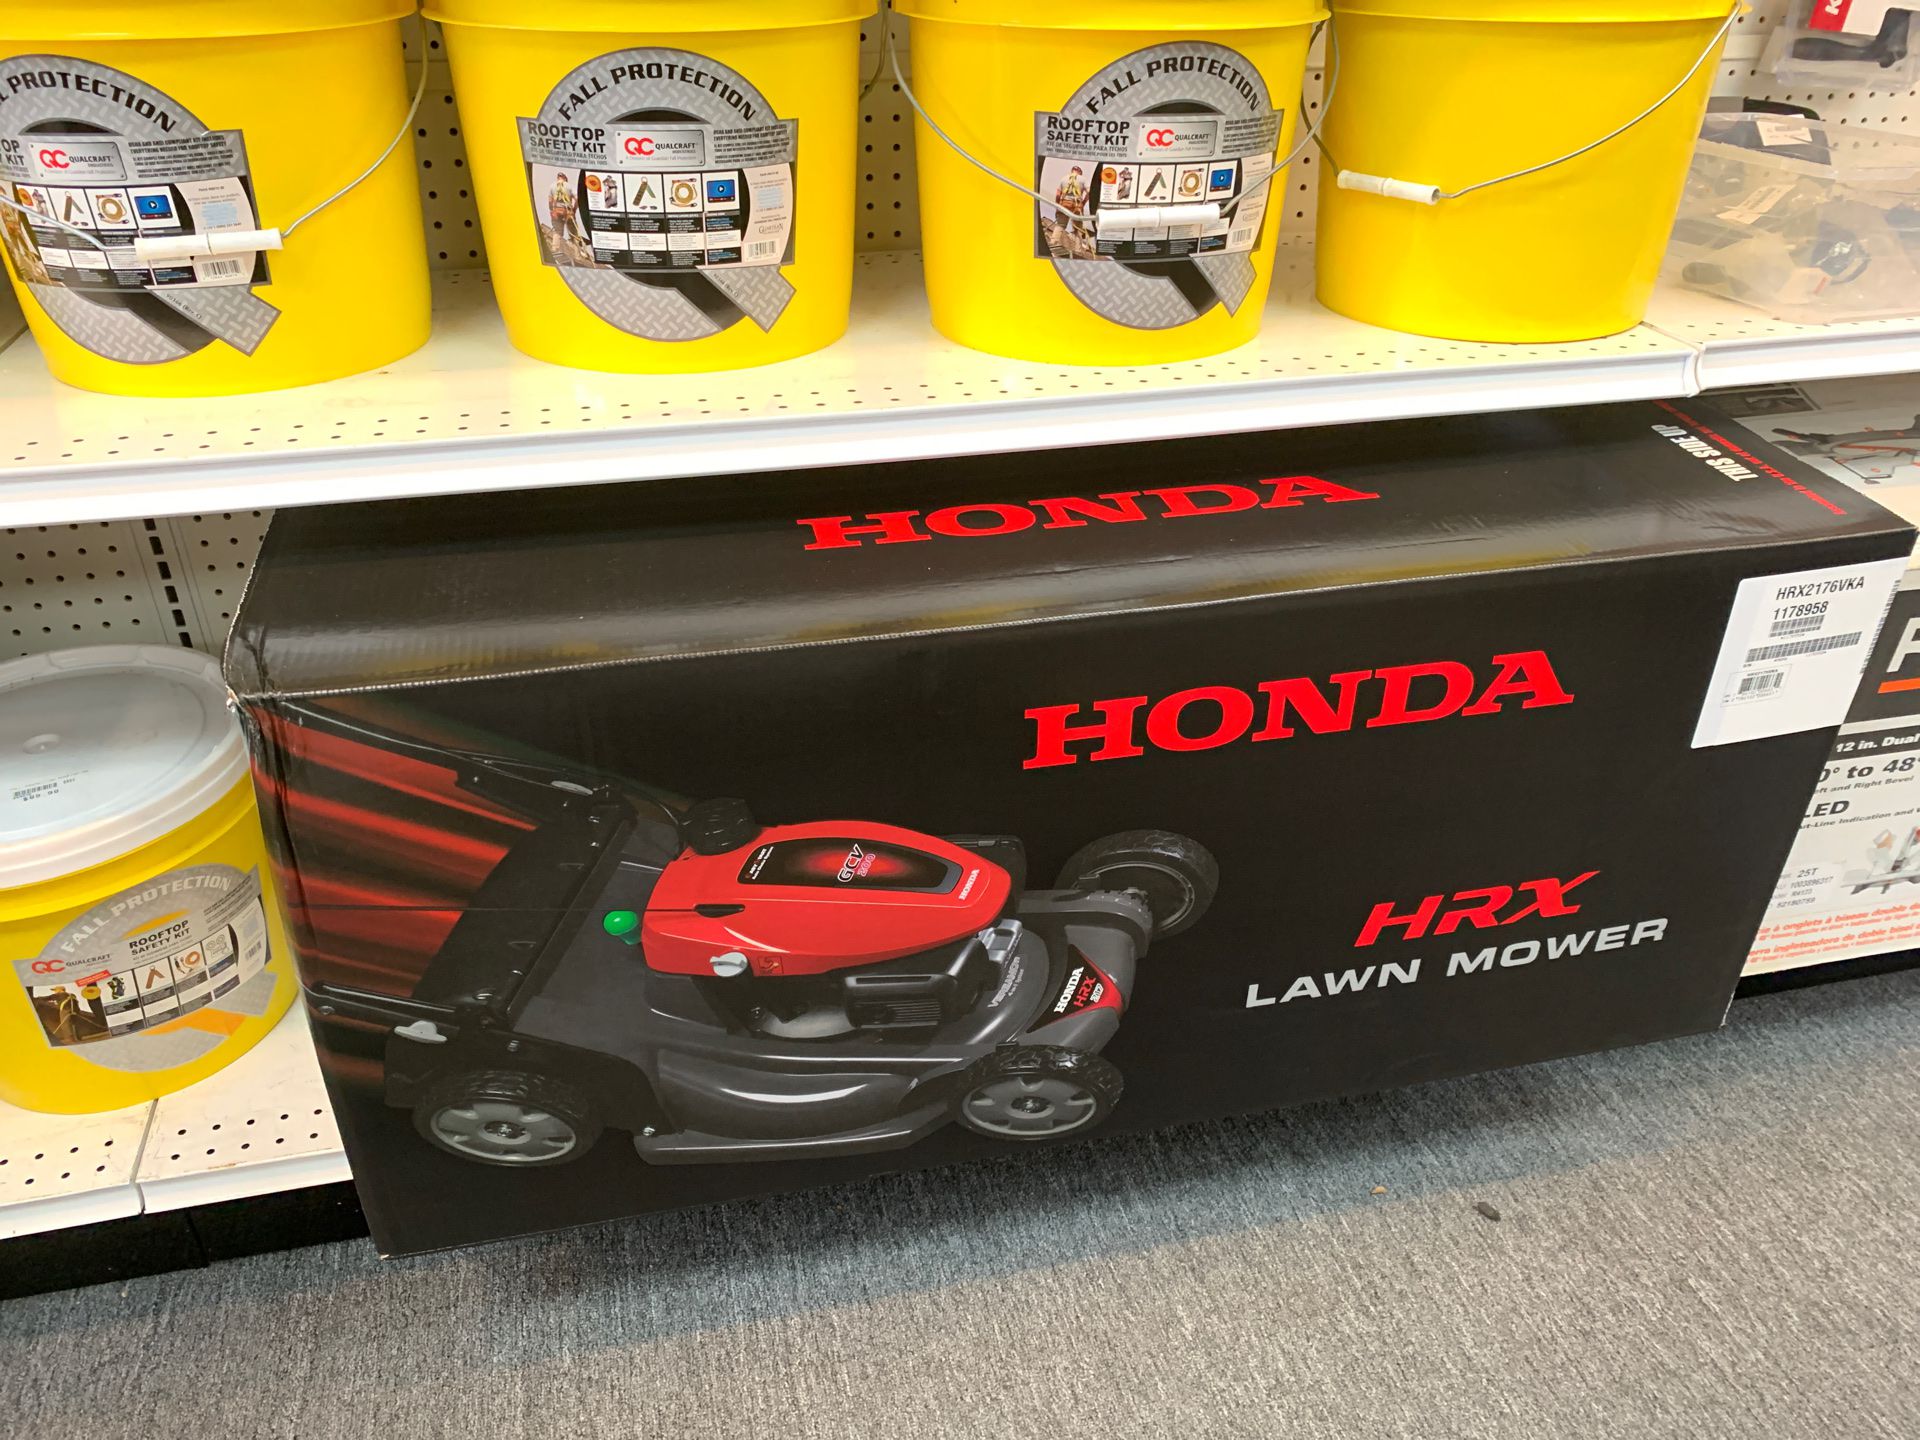 Honda HRX lawn mower